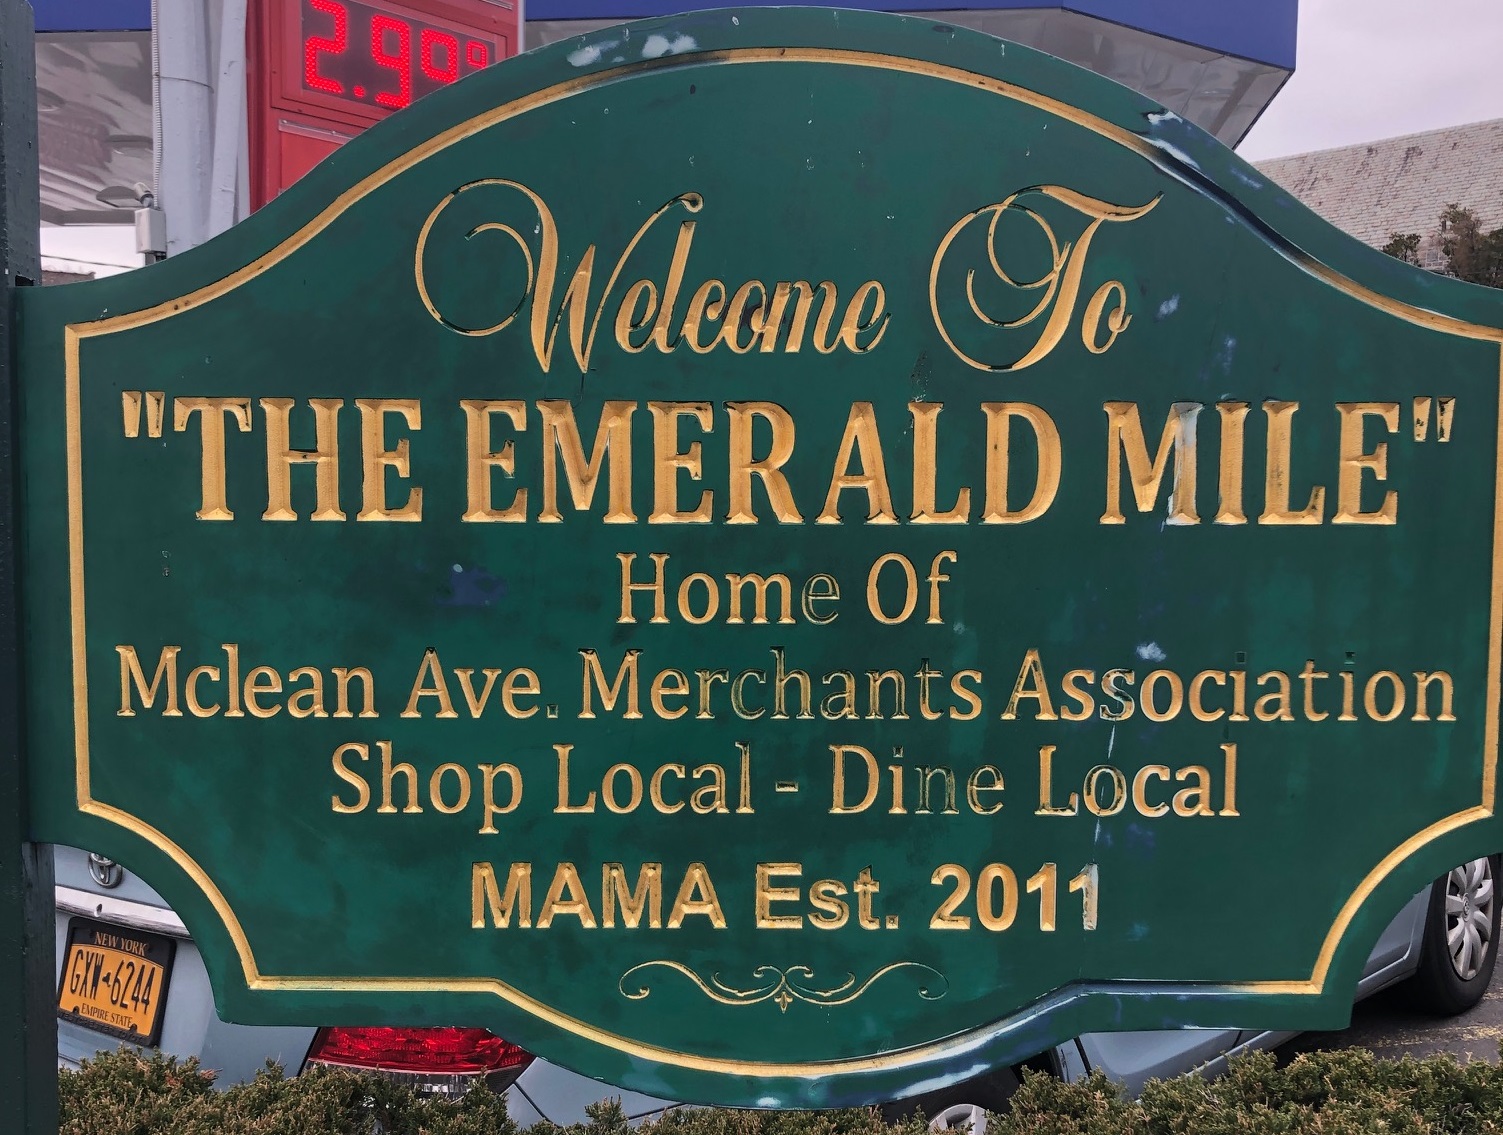 Emerald Mile